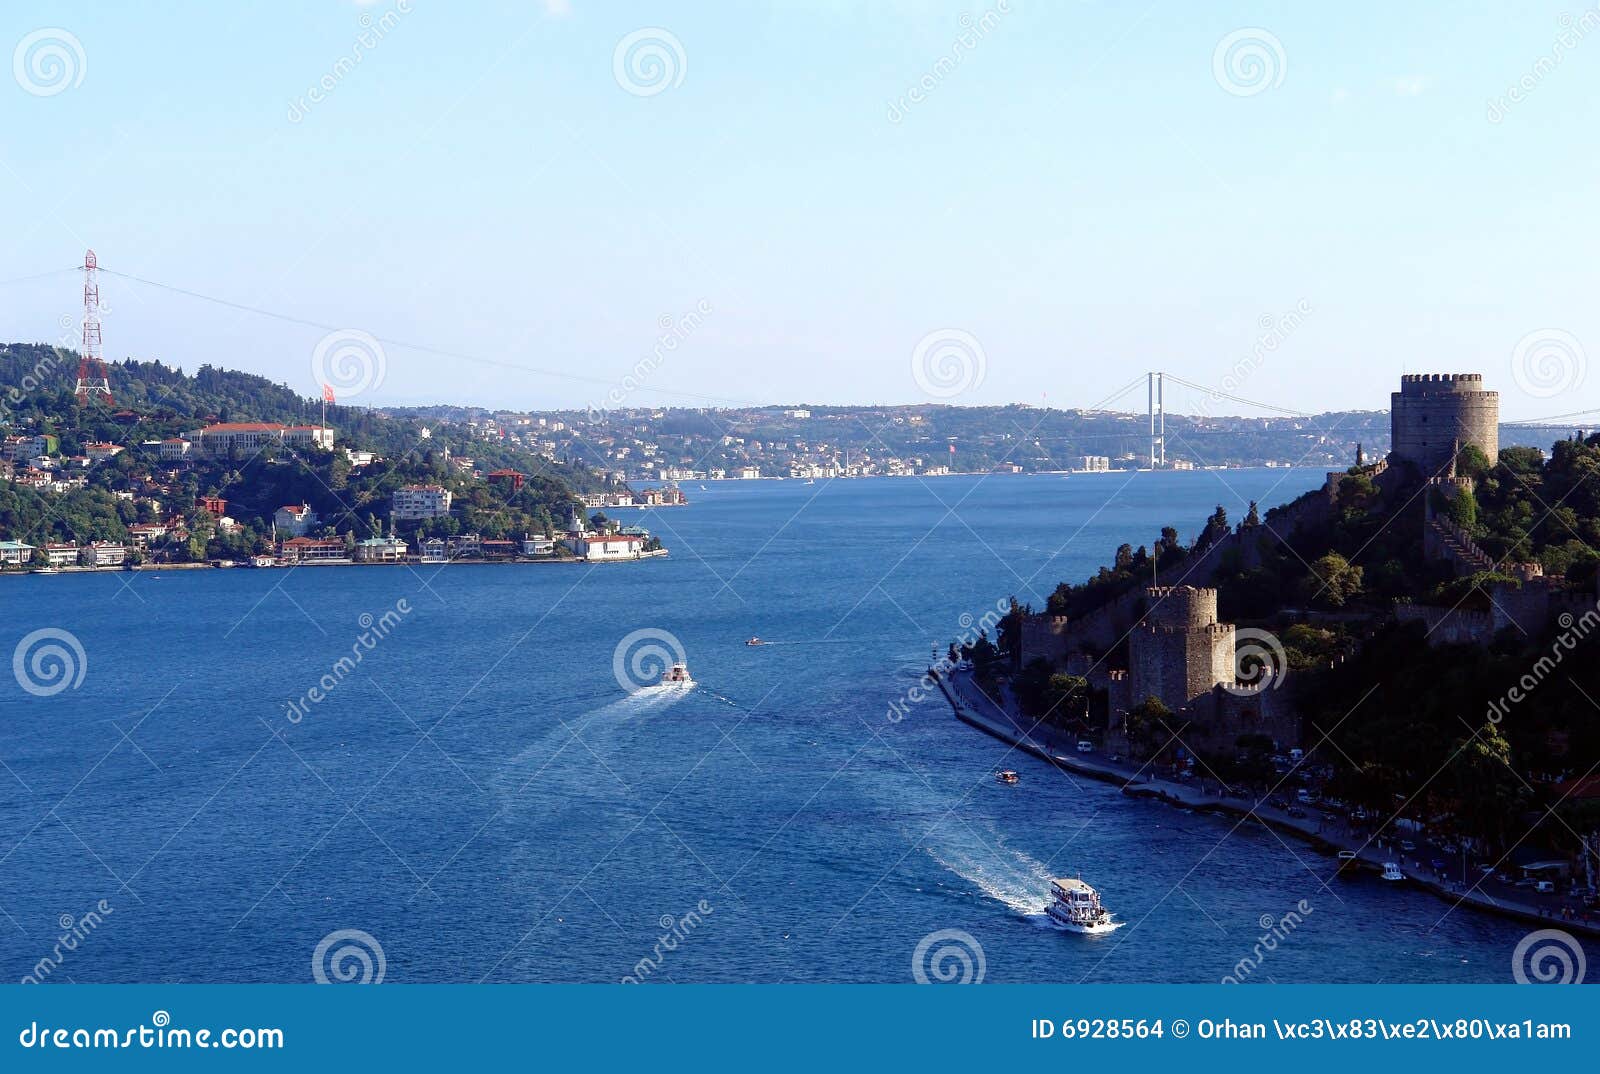 bosphorus bridge - istanbul - turkey